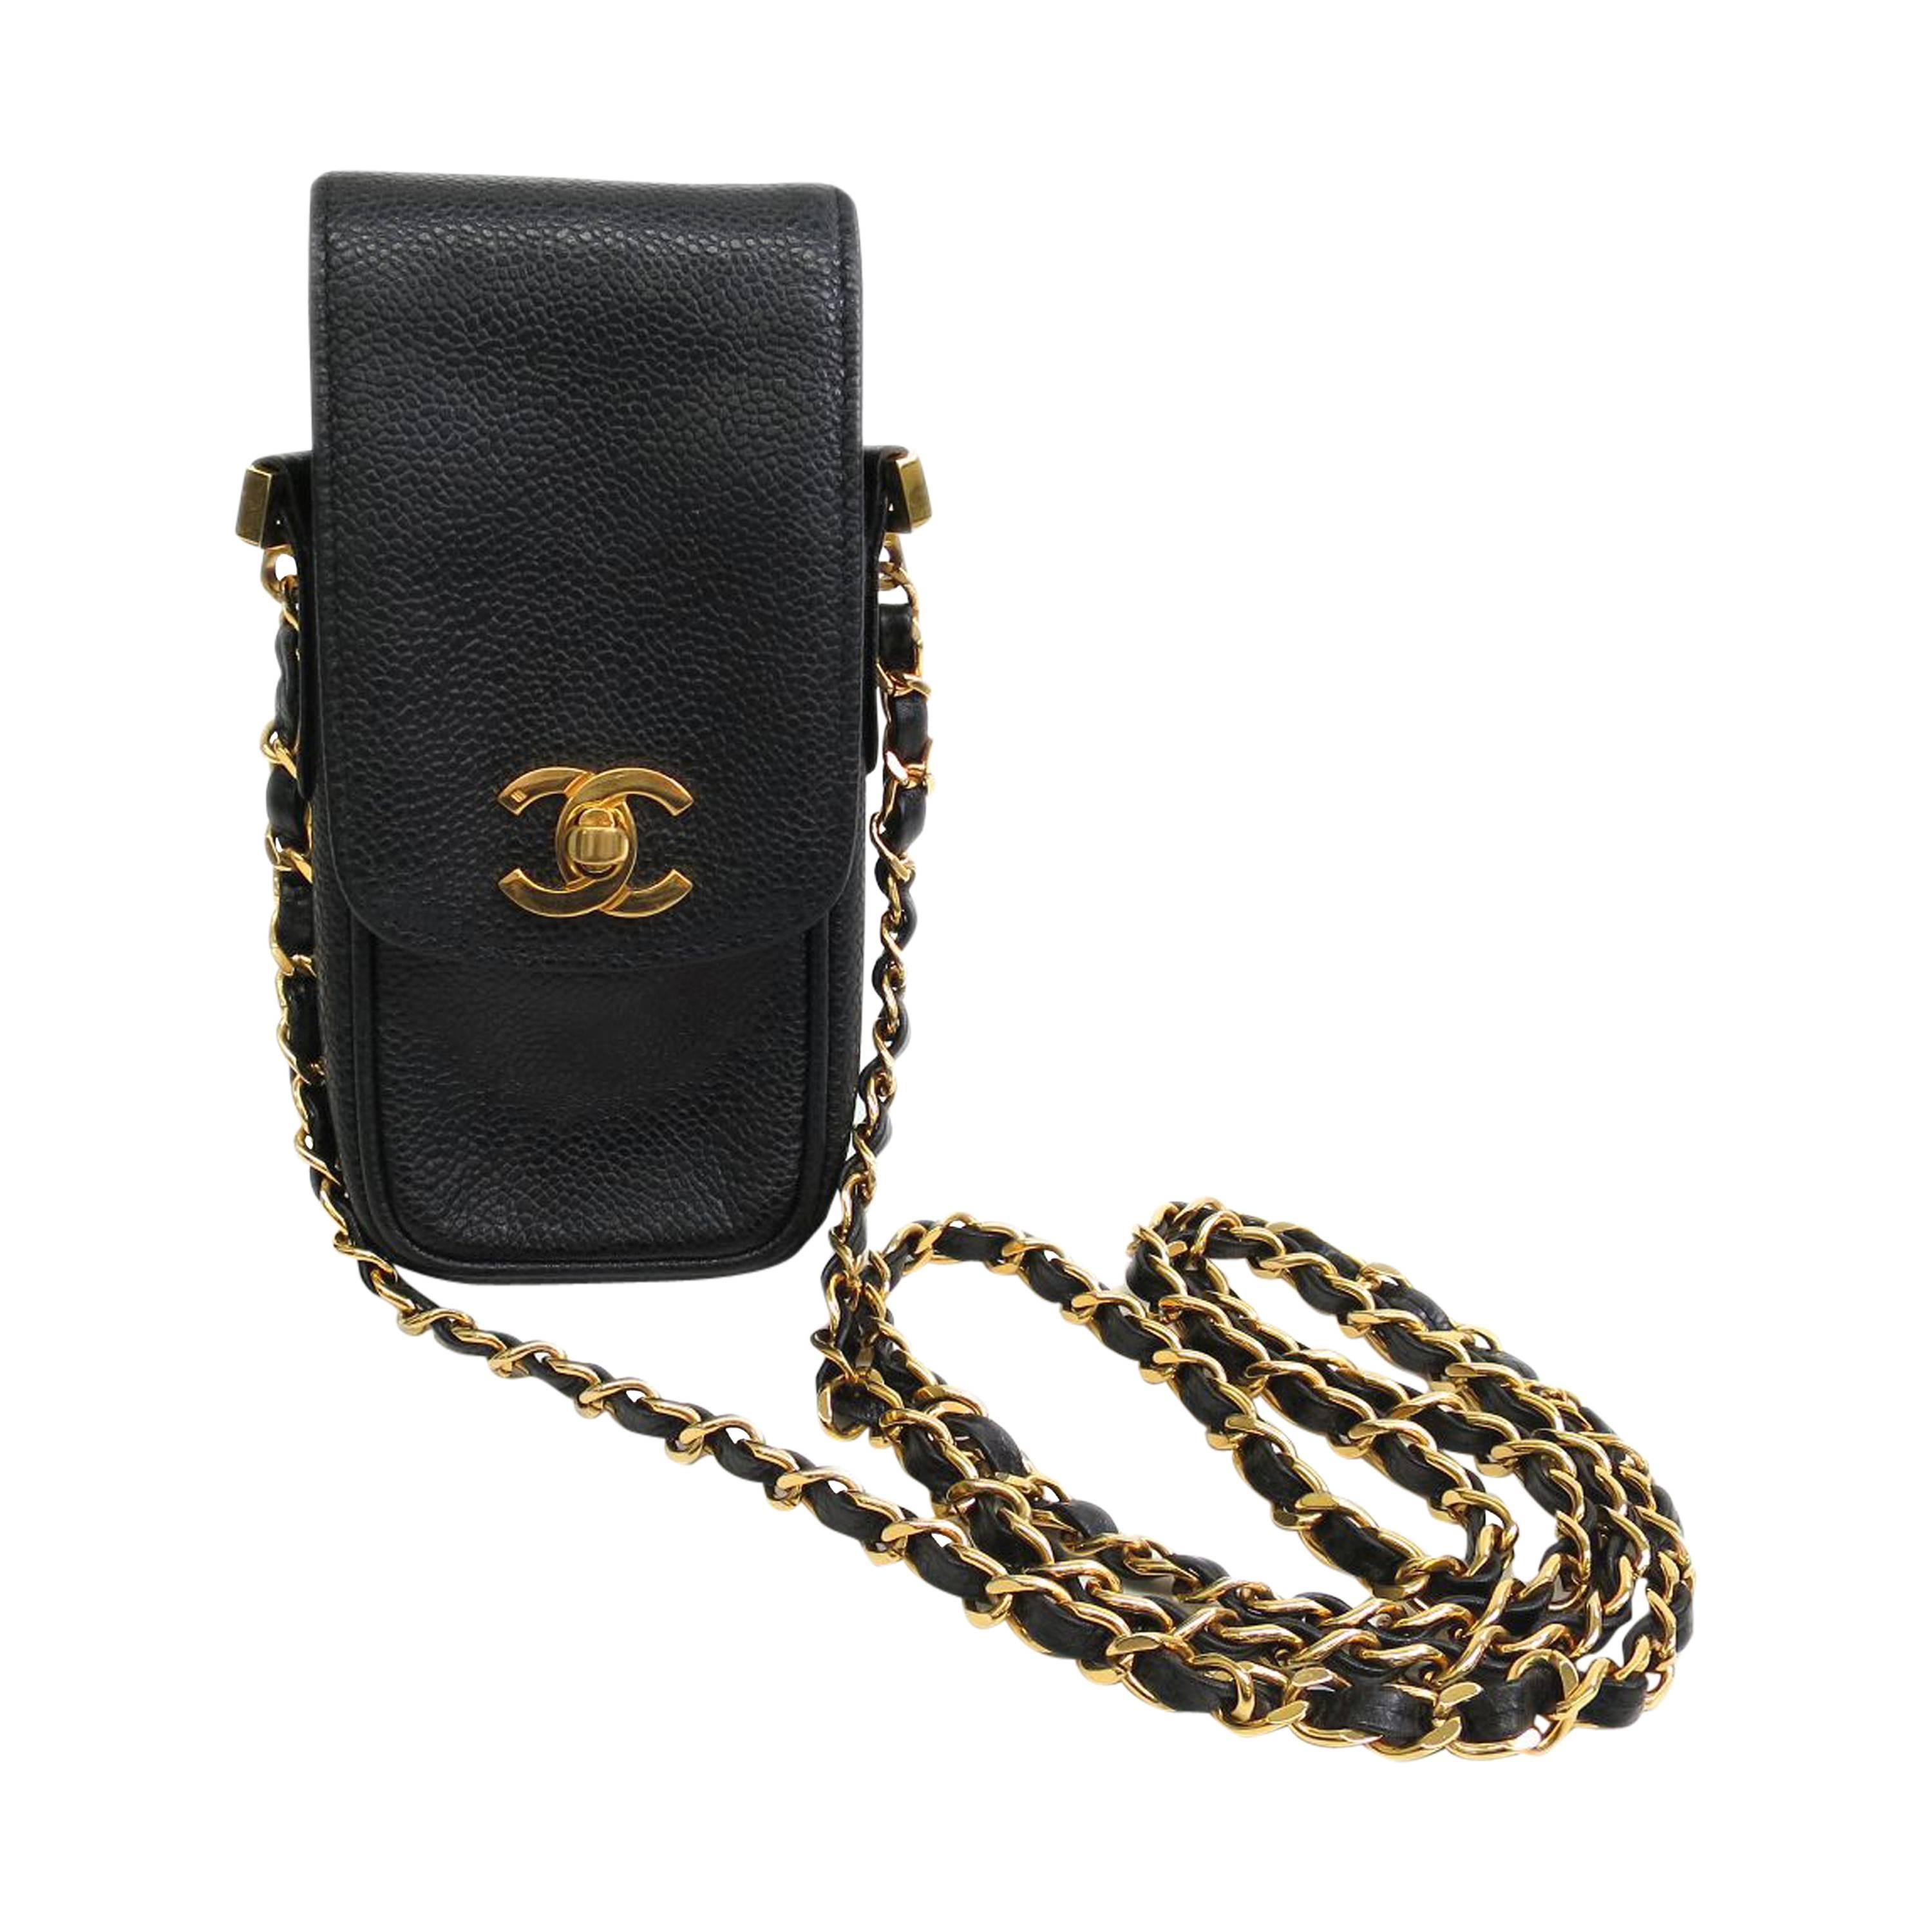 Chanel Black Caviar Leather Gold Hardware Phone Case Crossbody Shoulder Bag